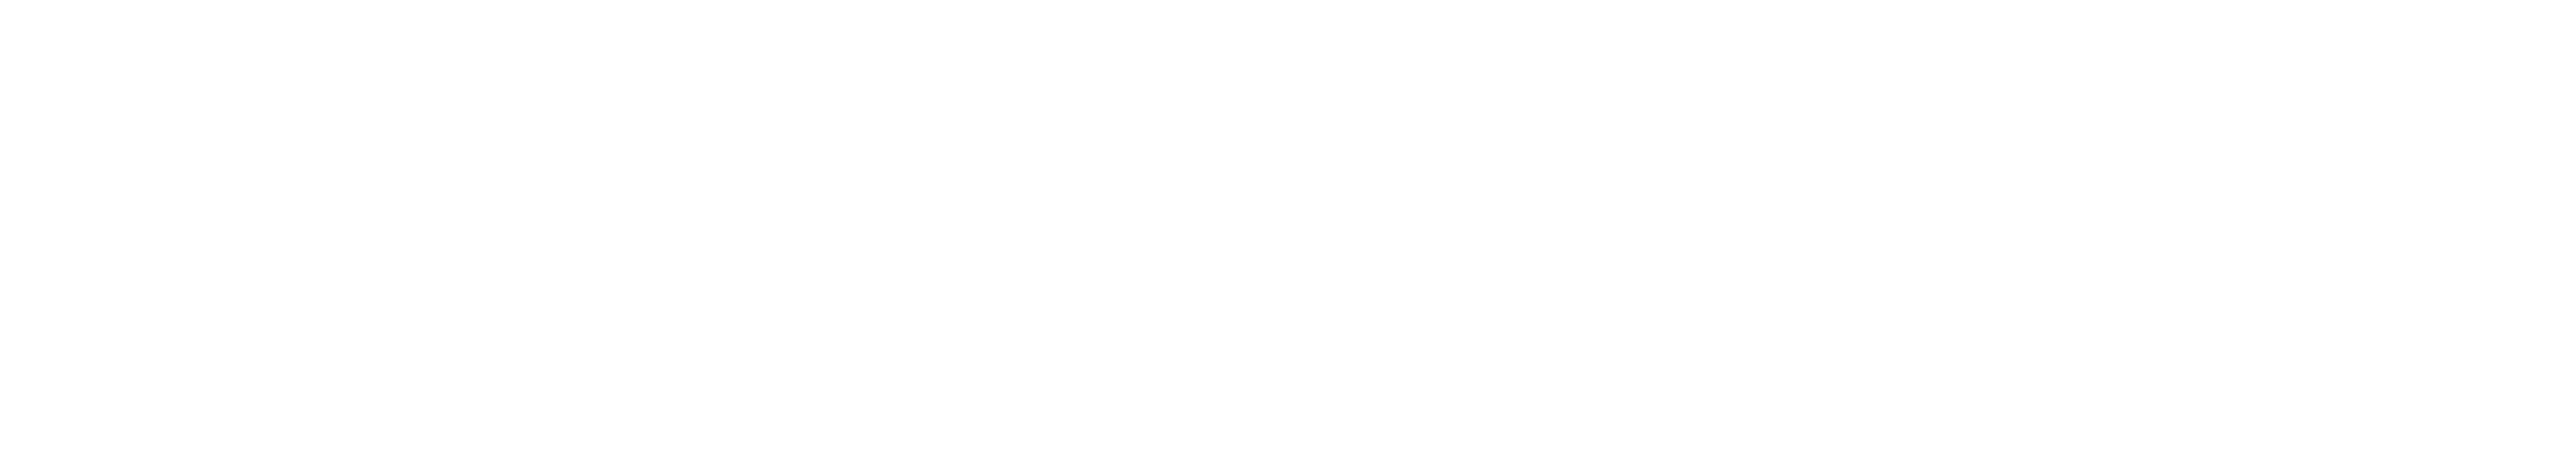 Logo OpServices em Branco